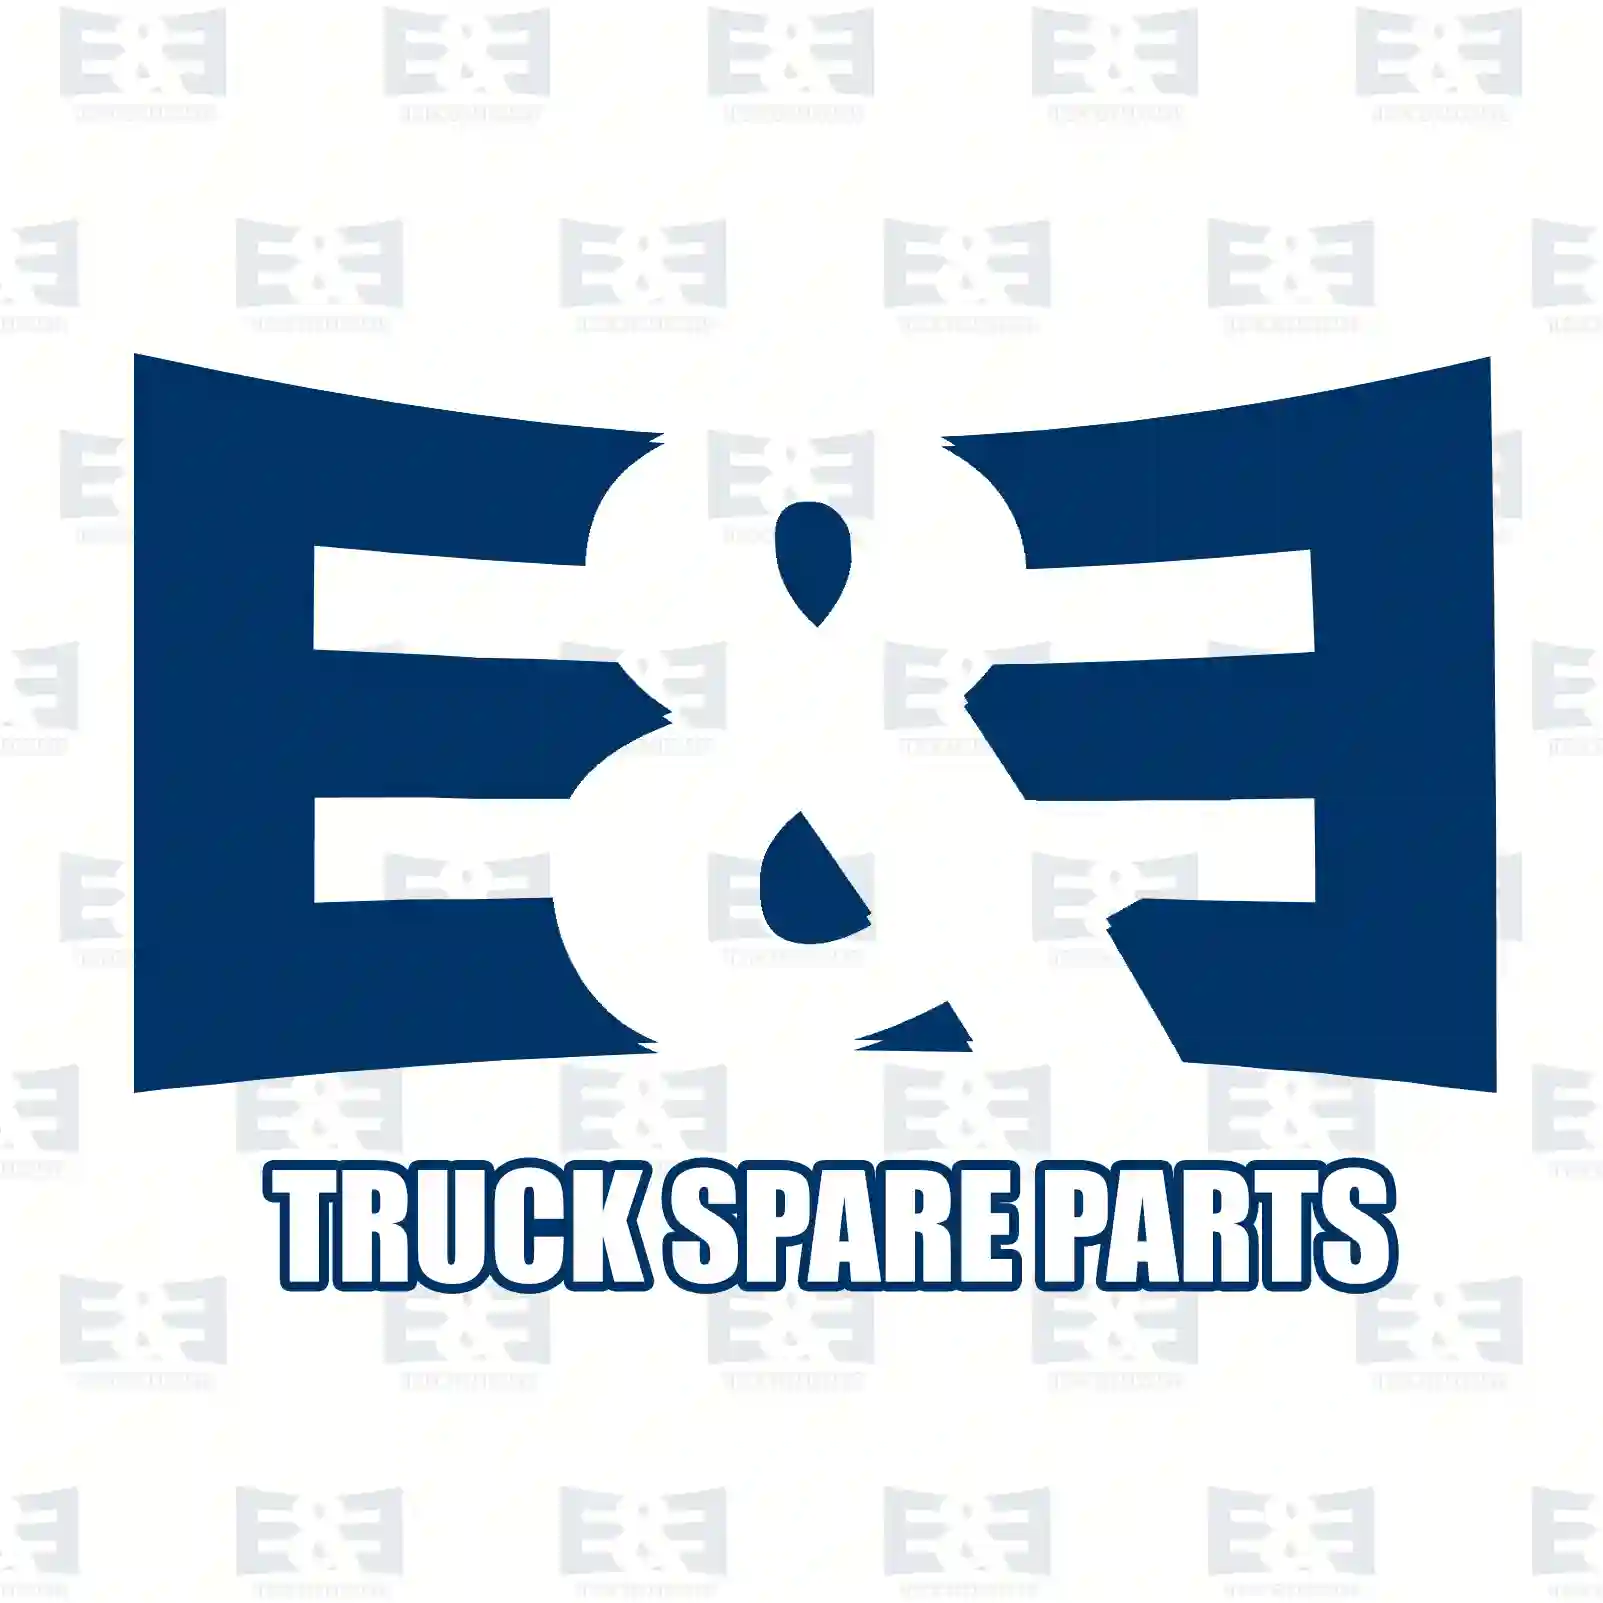 Drum brake lining kit, axle kit, 2E2294917, 1304932, 162869, 551009, 551052, 551058, 551065, 551101, 551113, 551147, 551153, 551169, 551169S, 751009 ||  2E2294917 E&E Truck Spare Parts | Truck Spare Parts, Auotomotive Spare Parts Drum brake lining kit, axle kit, 2E2294917, 1304932, 162869, 551009, 551052, 551058, 551065, 551101, 551113, 551147, 551153, 551169, 551169S, 751009 ||  2E2294917 E&E Truck Spare Parts | Truck Spare Parts, Auotomotive Spare Parts